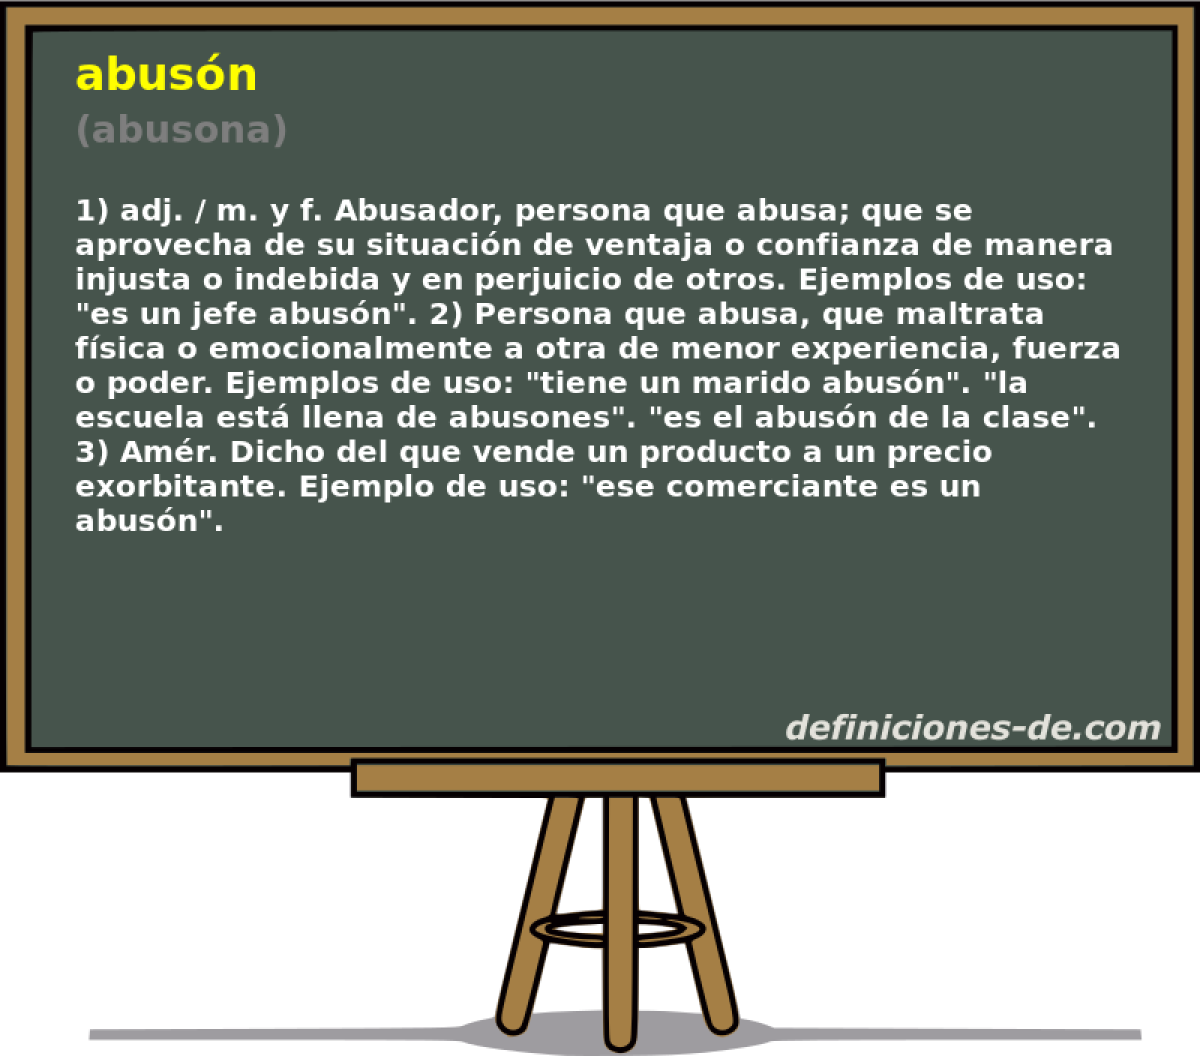 abusn (abusona)